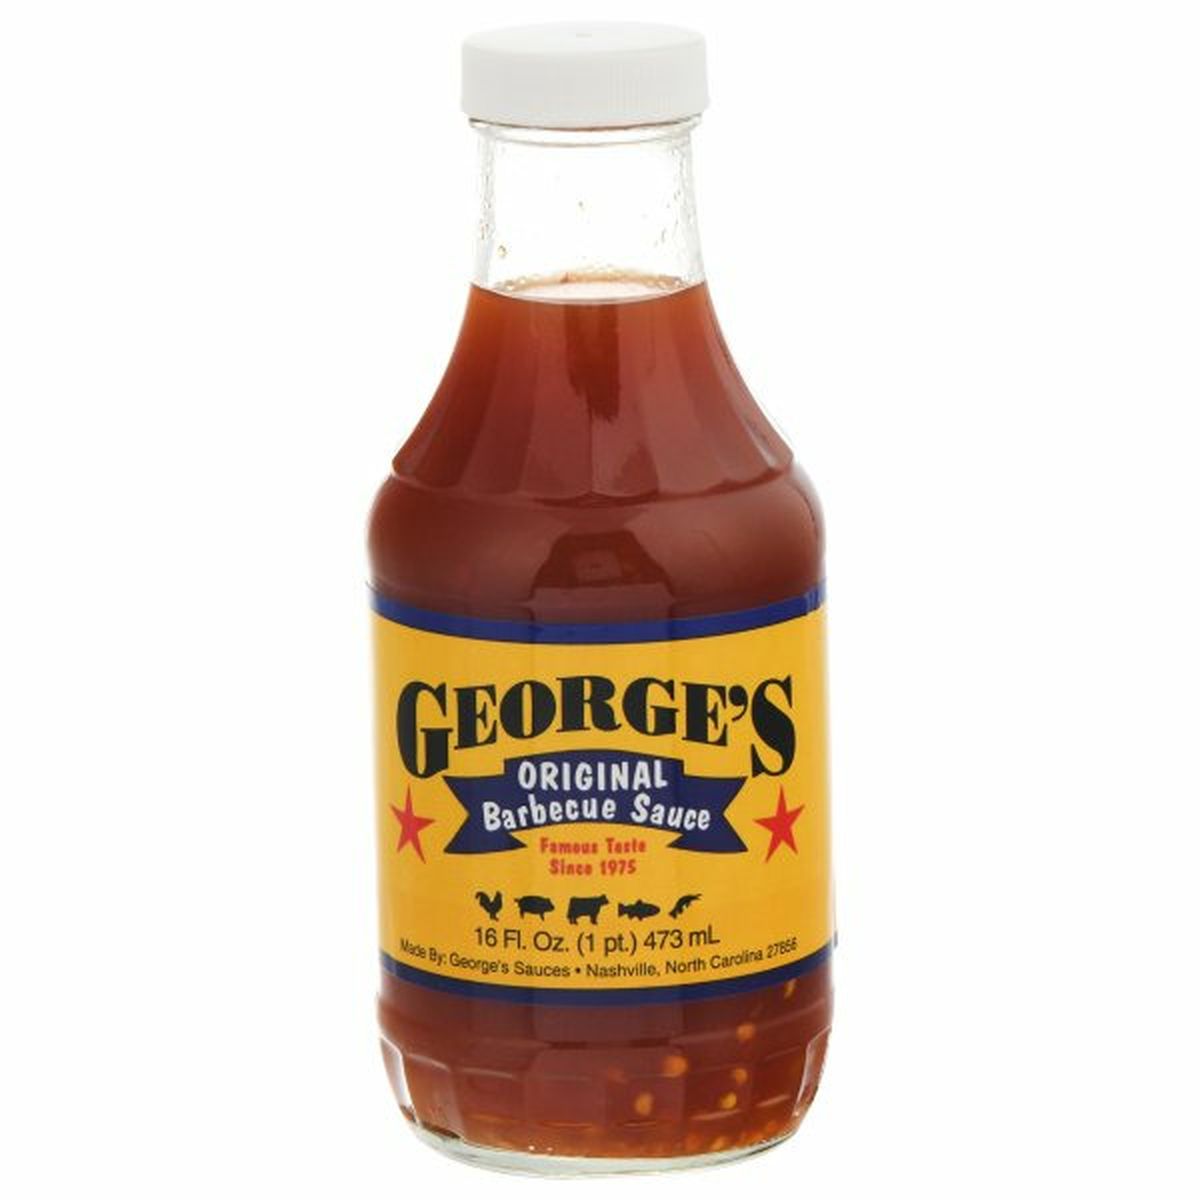 Calories in George's Barbecue Sauce, Original